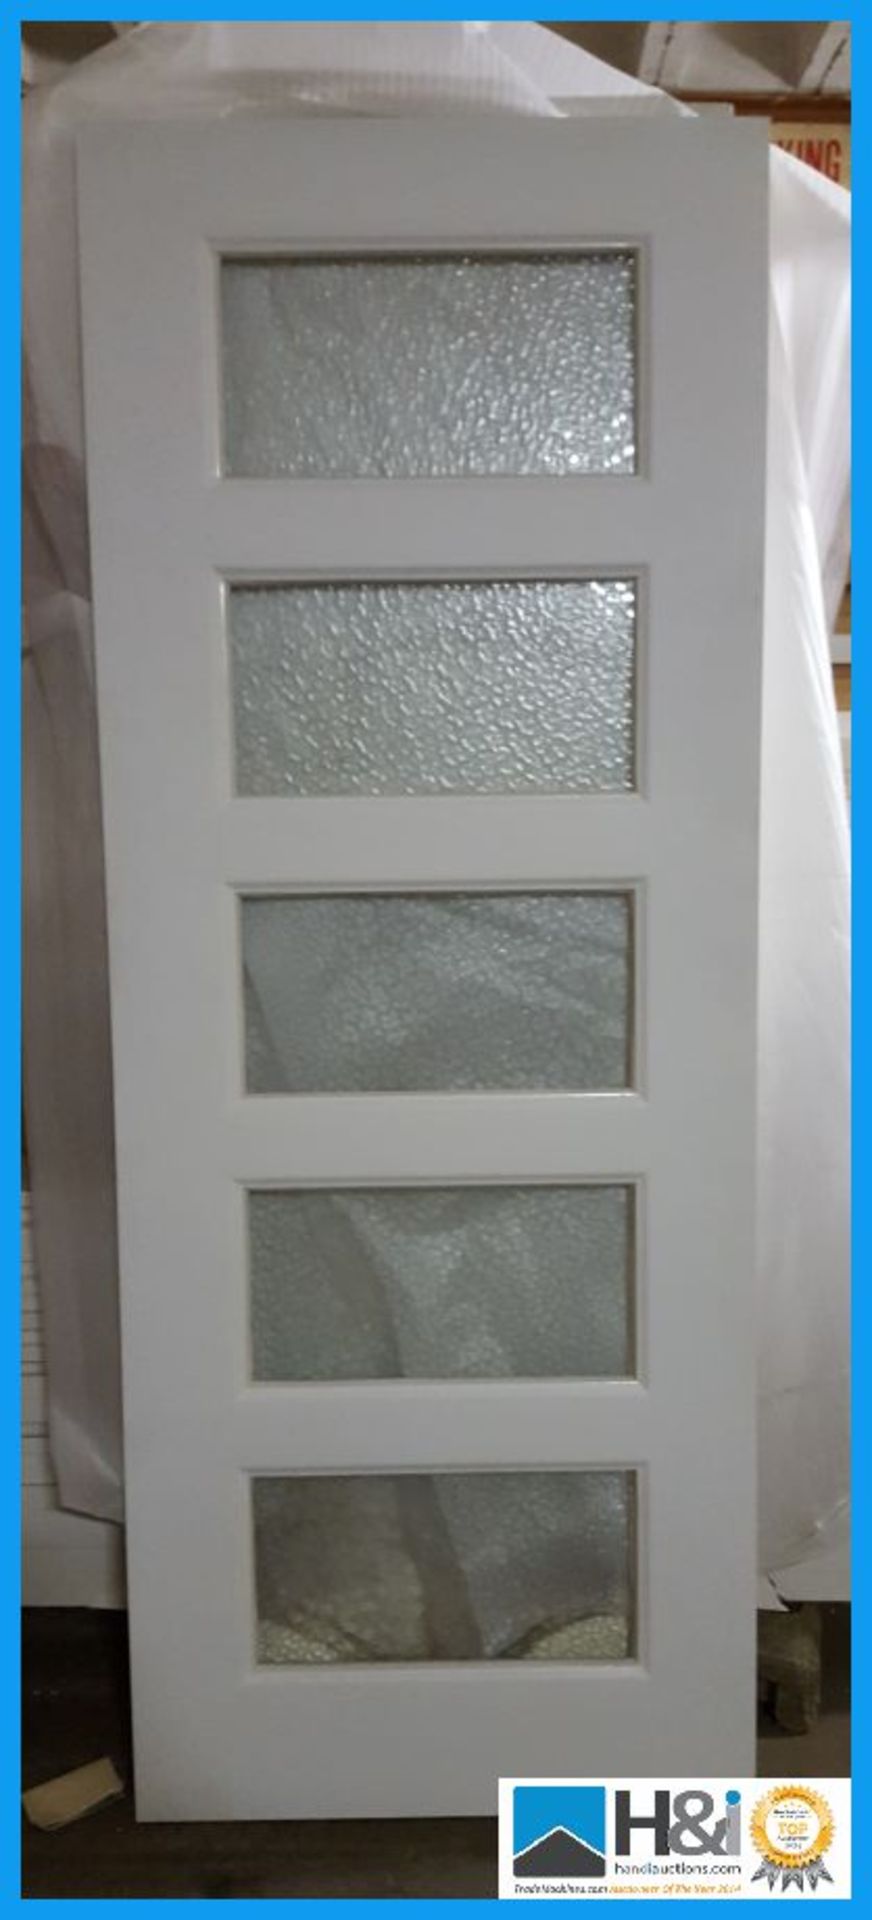 Havanna glazed (tempered glass) interior door. Size: 78 x 30 inch. RRP £99.99. Appraisal: Viewing